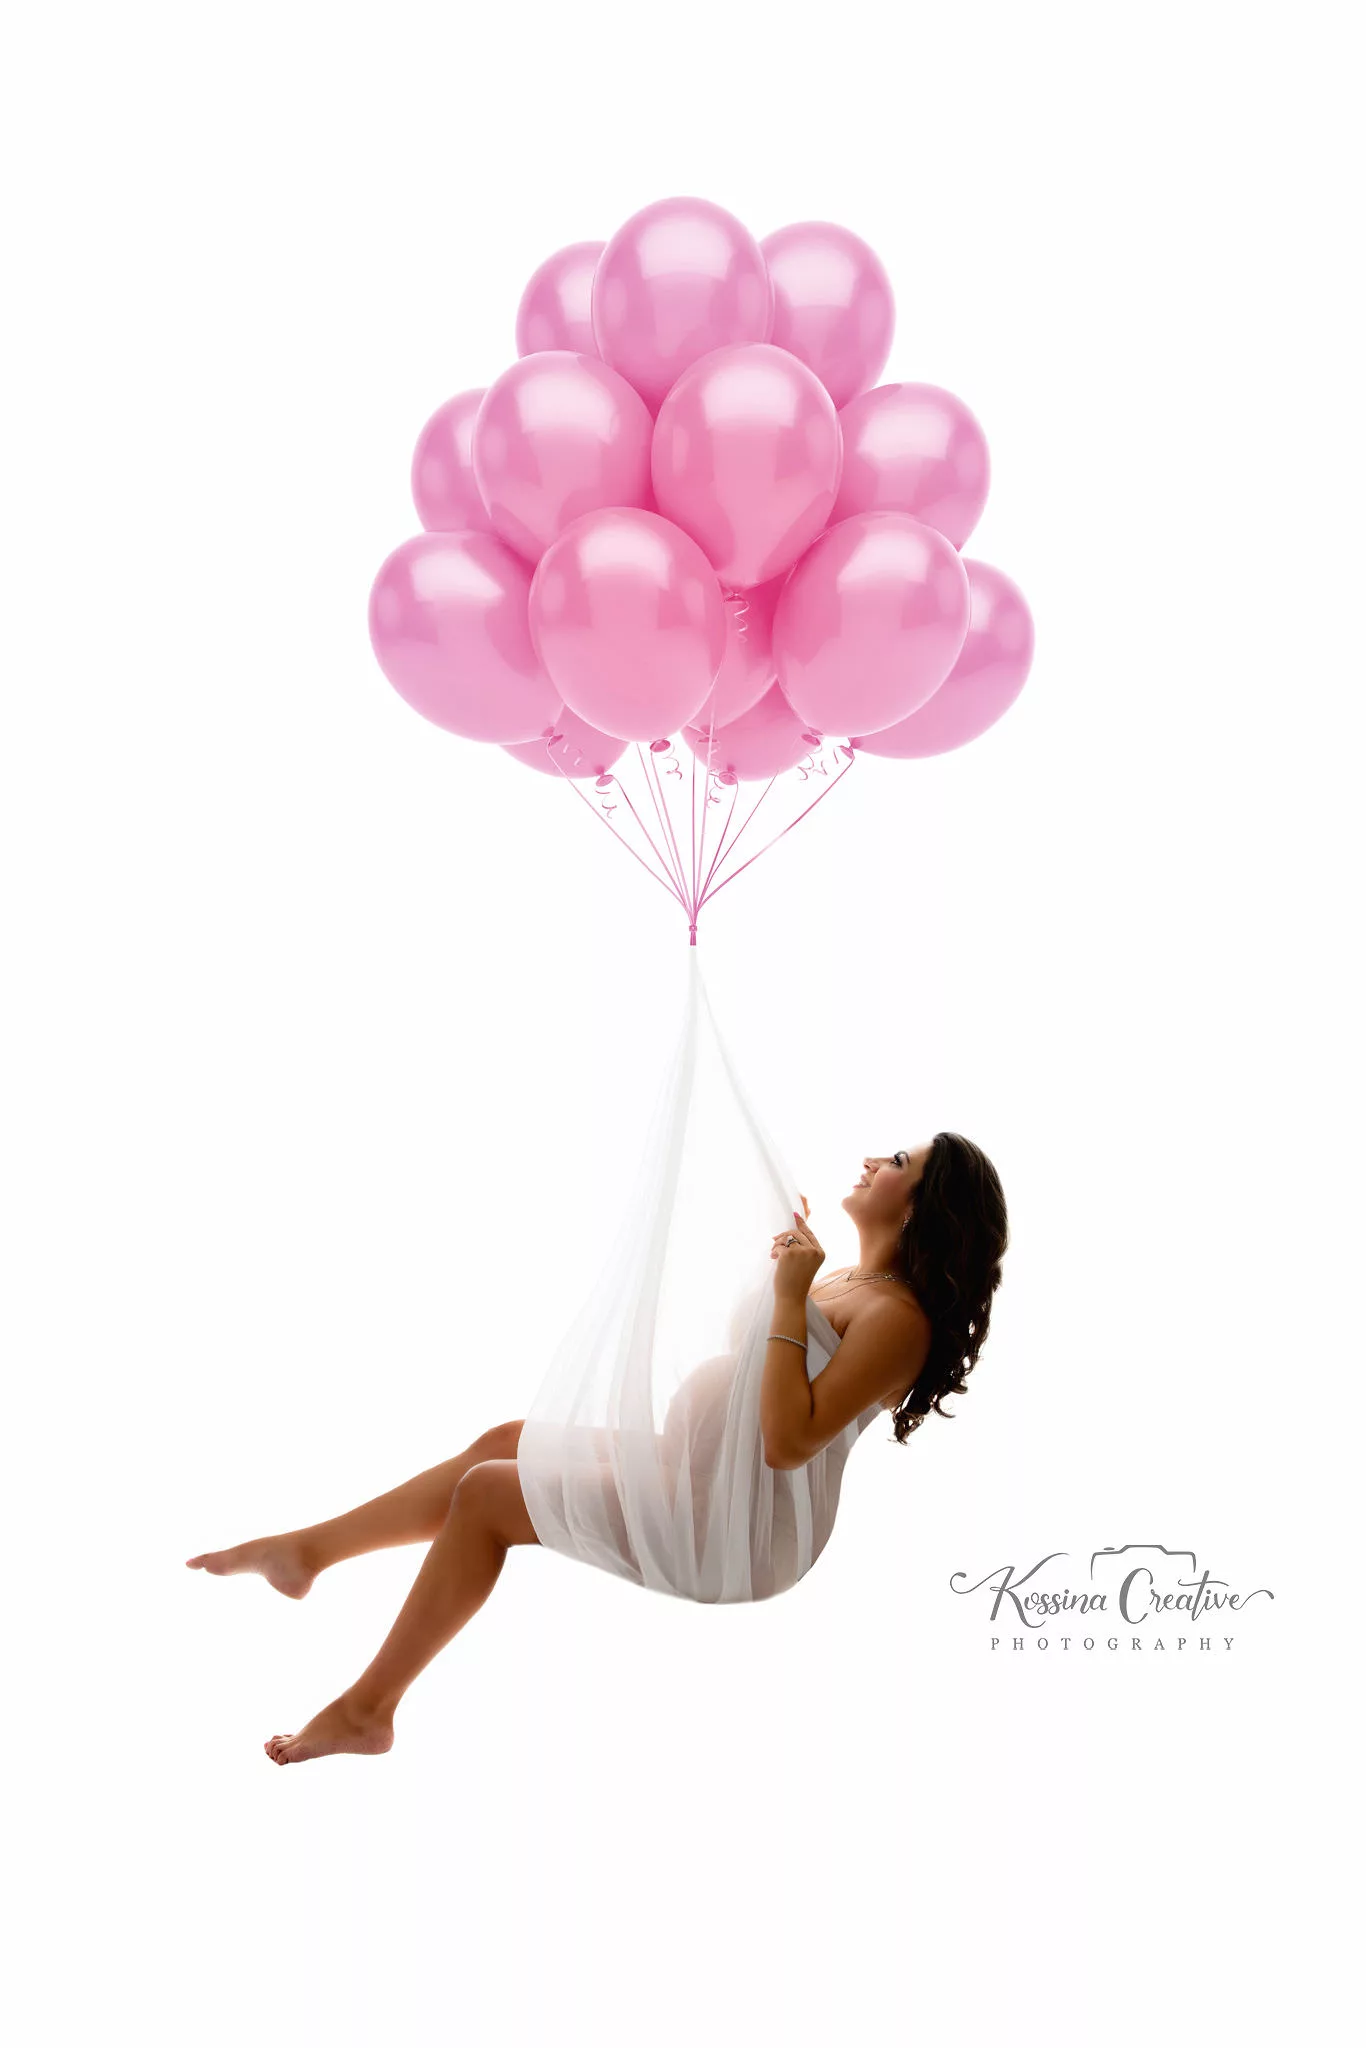 Orlando Maternity Photographer Photo Studio hanging pink balloon maternity